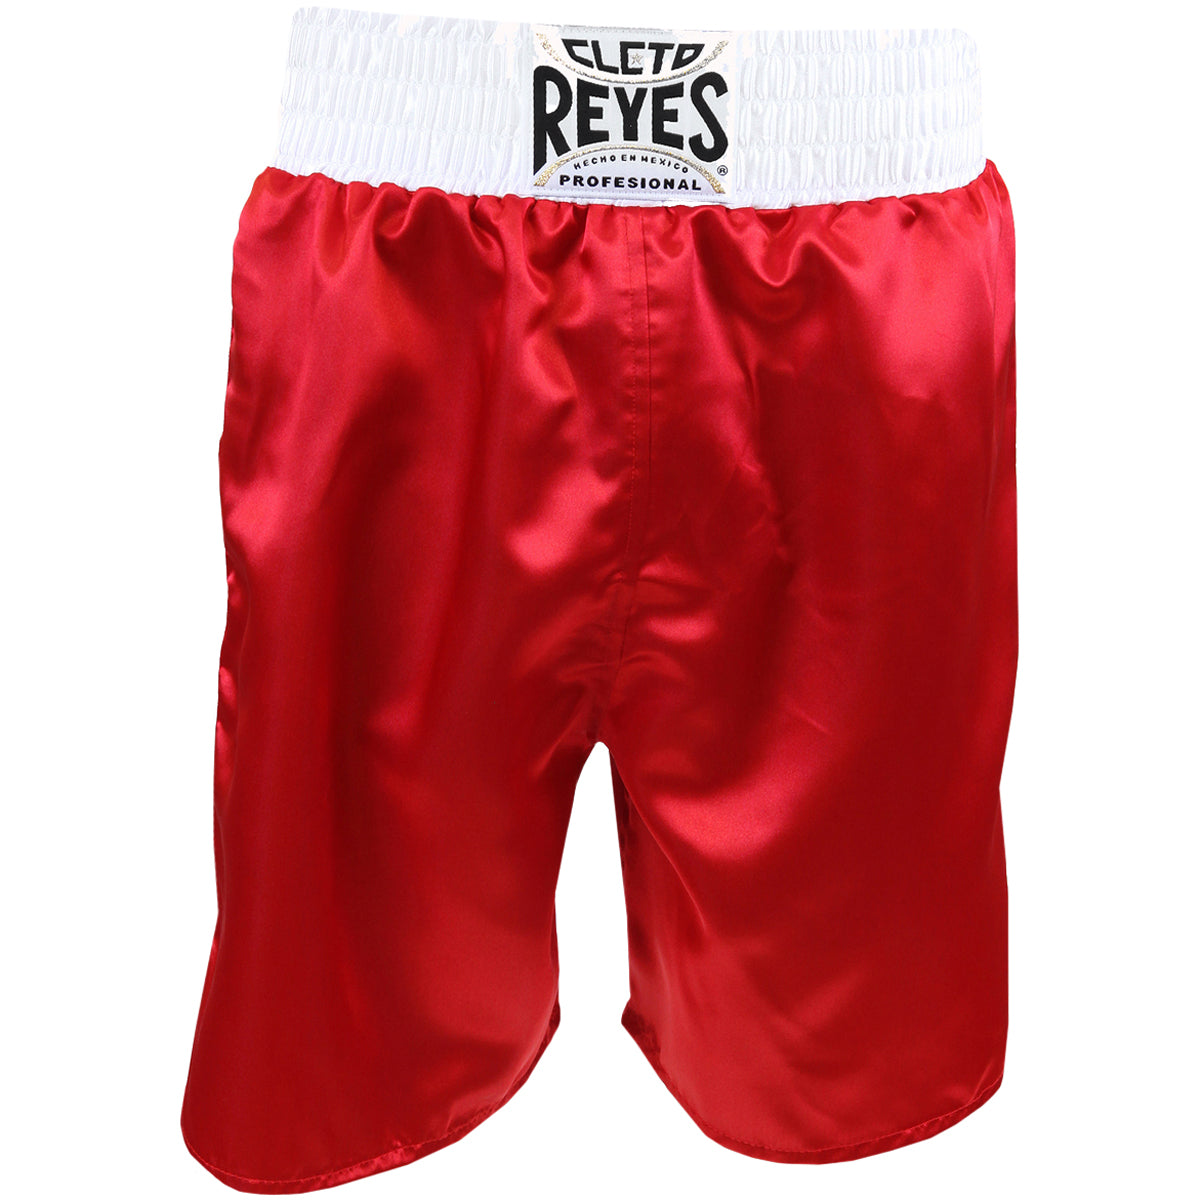 Cleto Reyes Satin Classic Boxing Trunks - Red/White Cleto Reyes